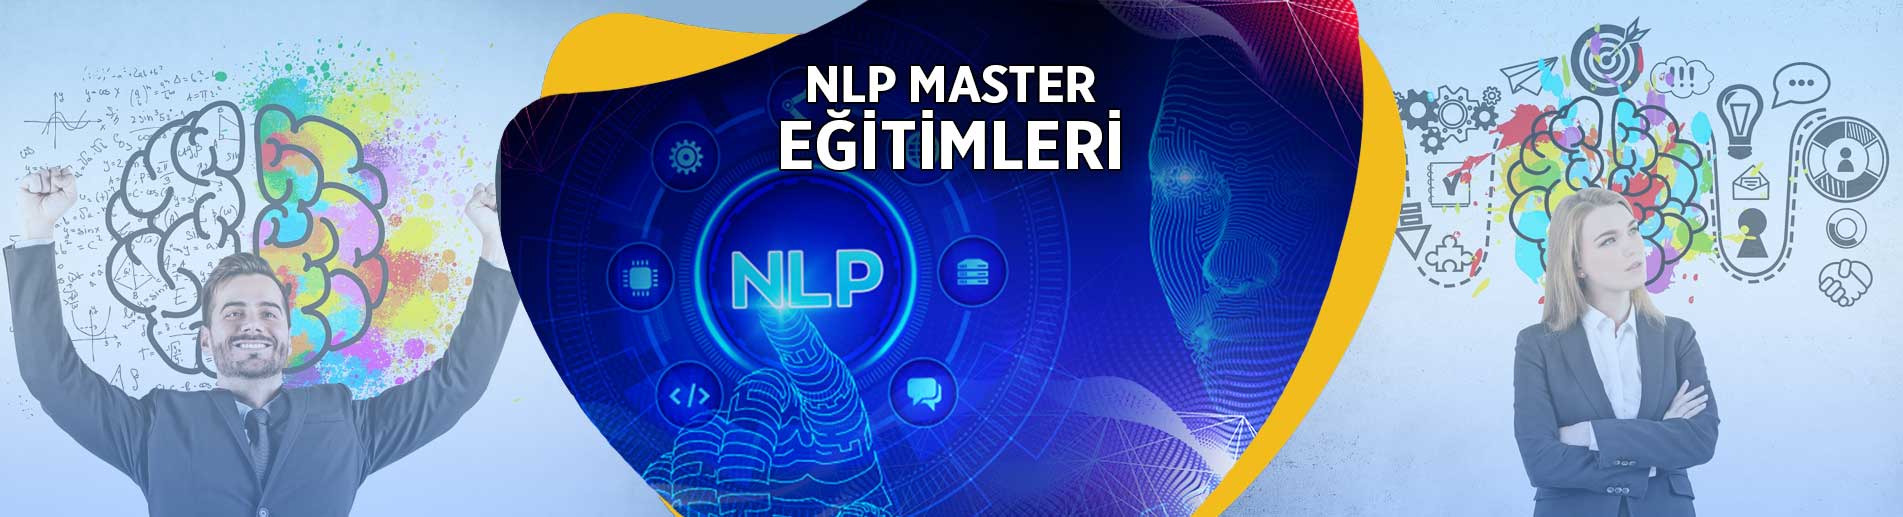 NLP Master Eğitimi Sertifika